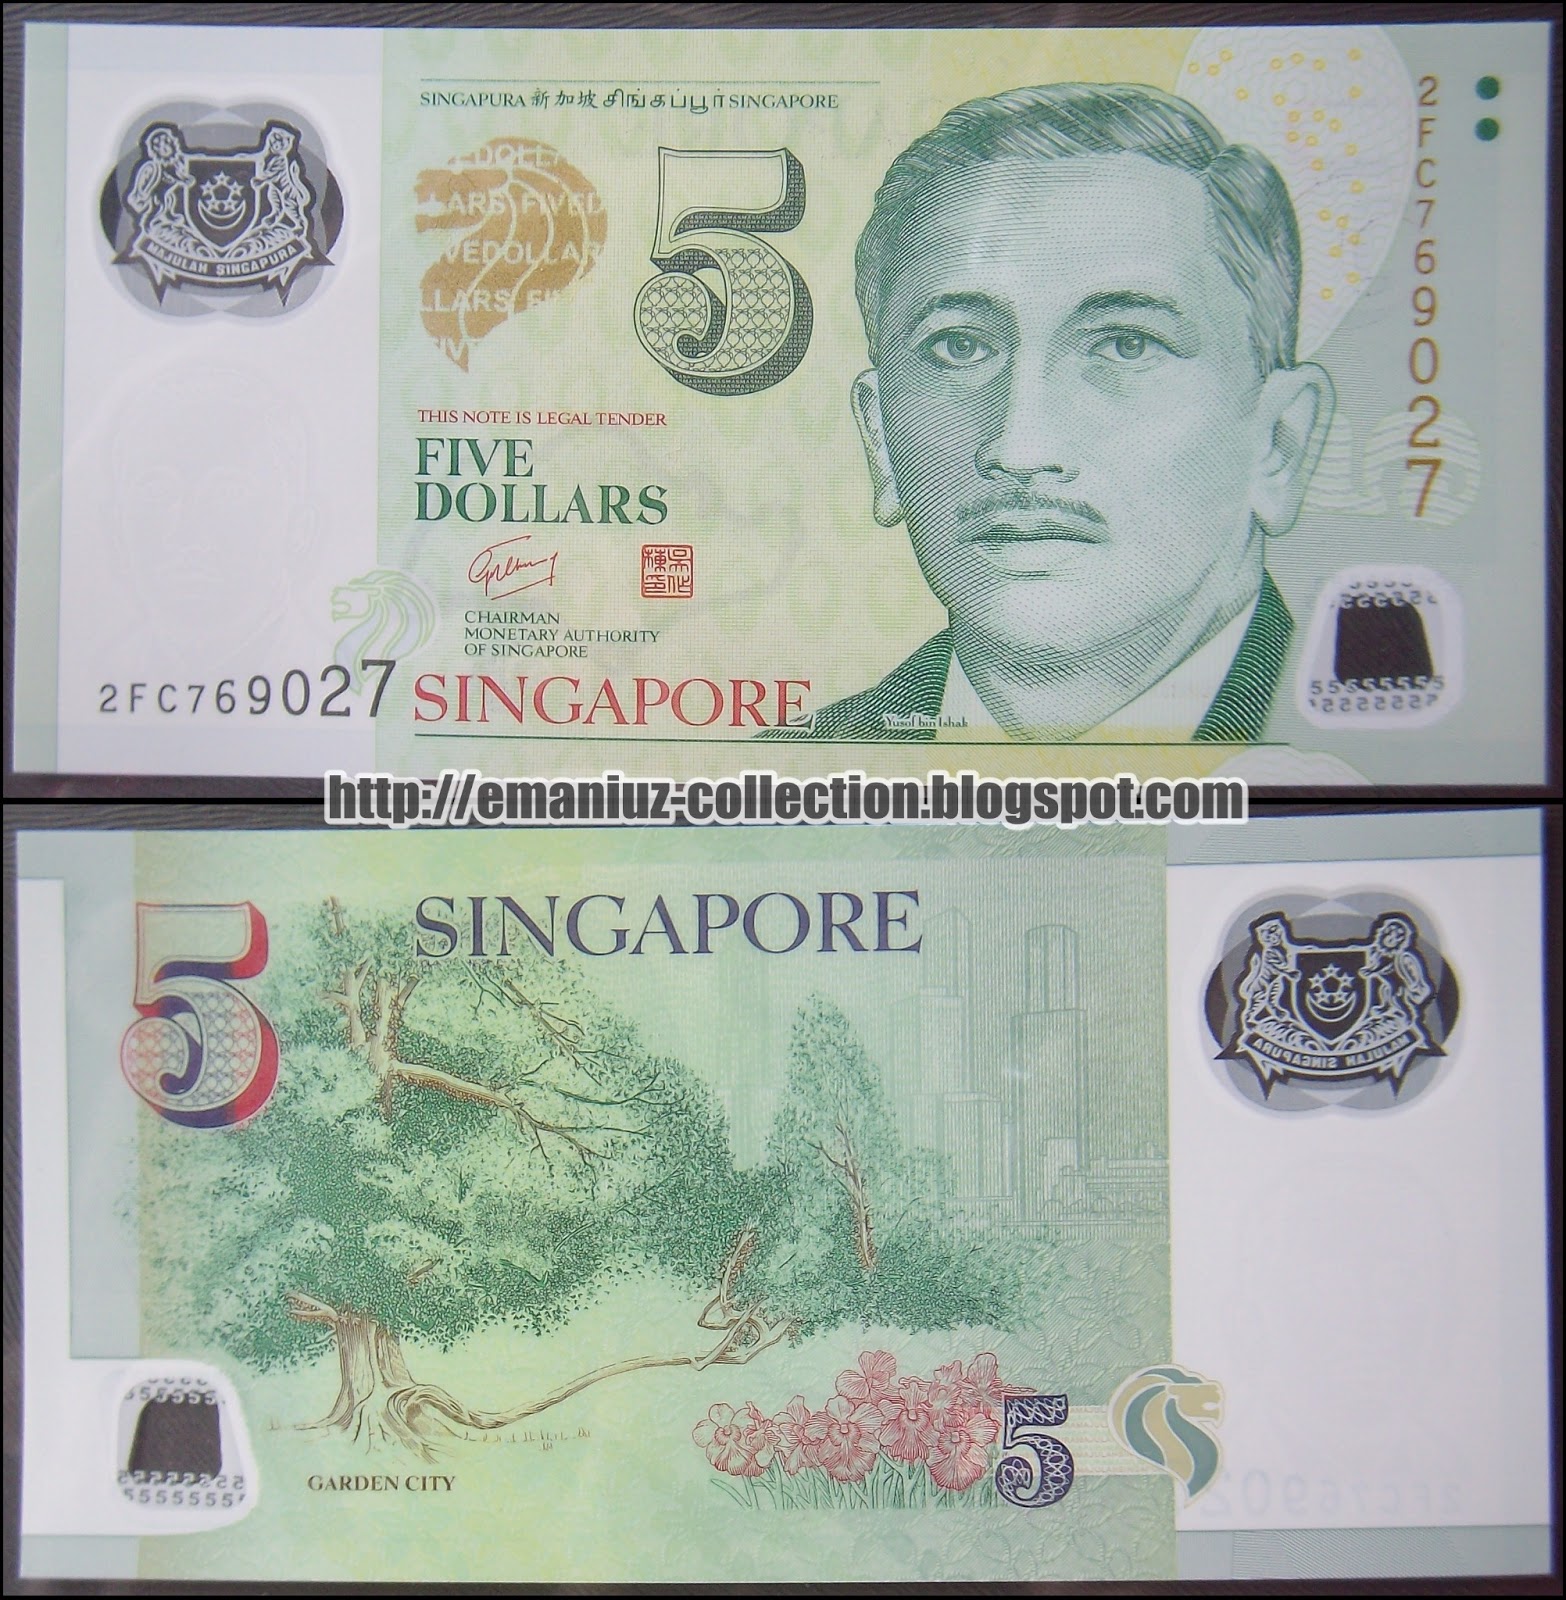 Songapore dollar